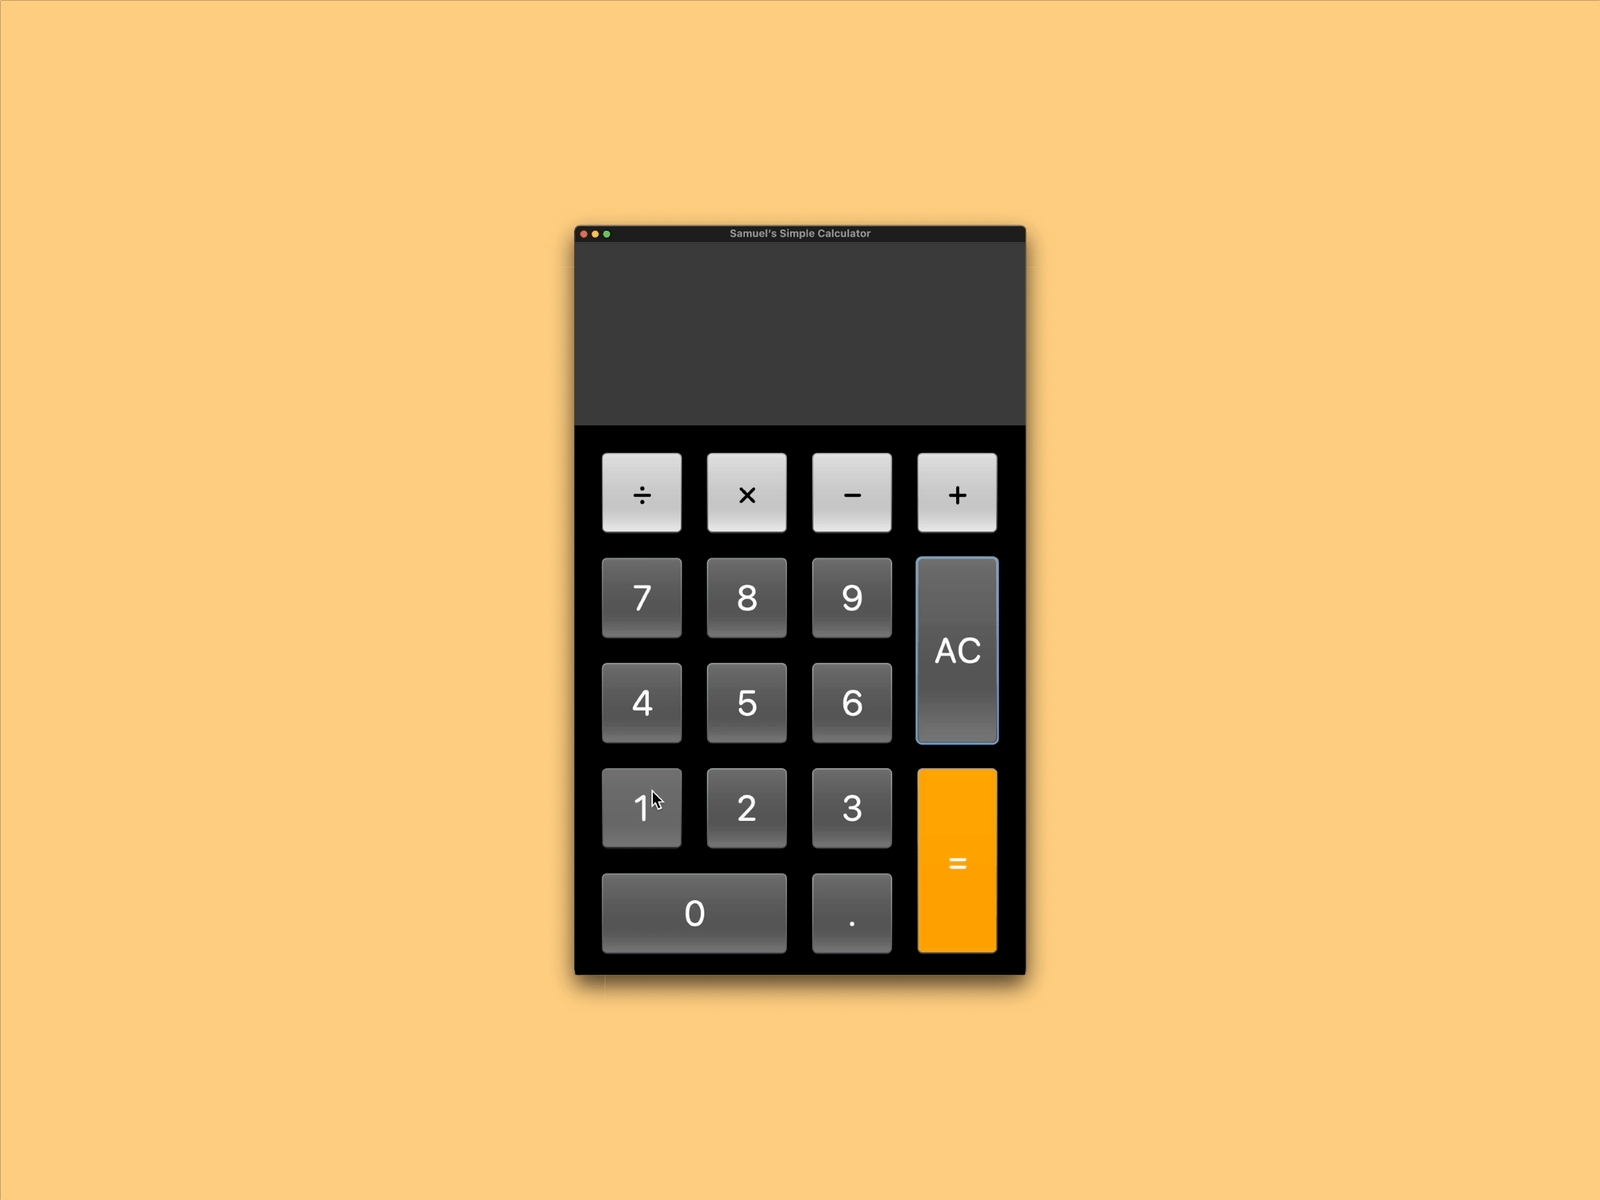 Java Calculator by Samuel on Dribbble